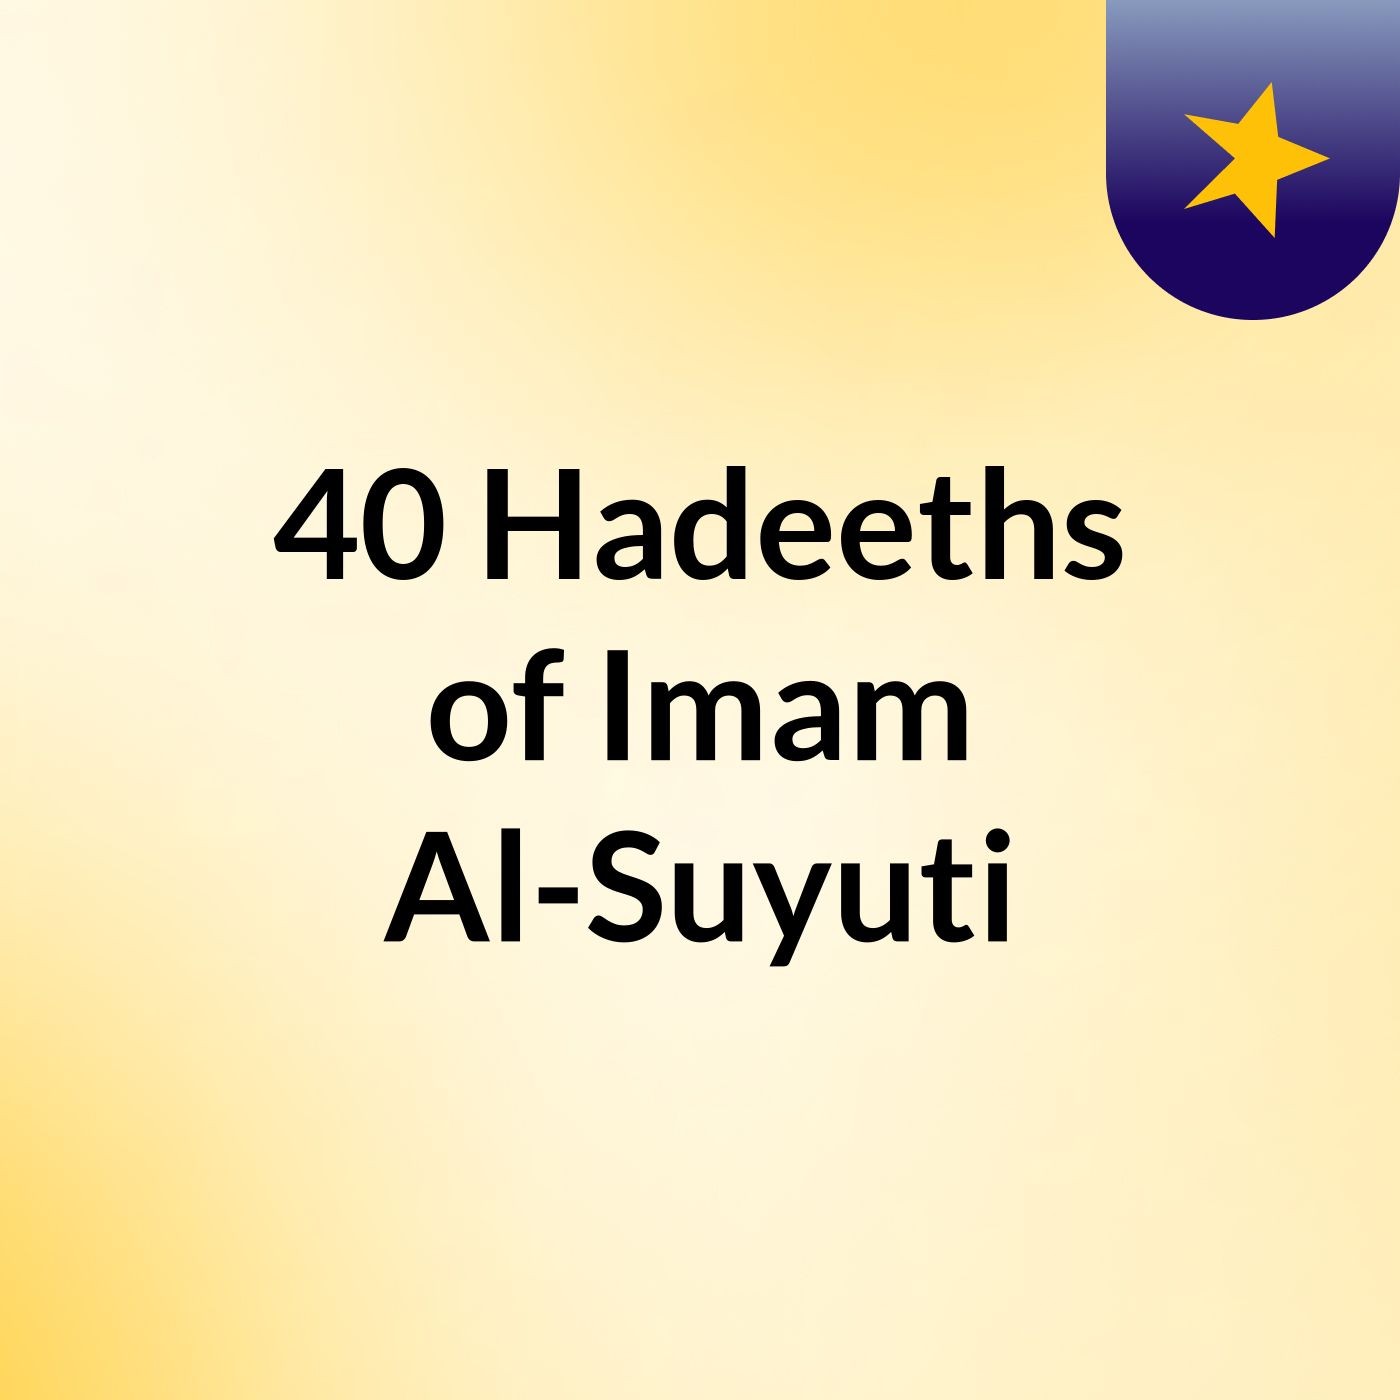 40 Hadeeths of Imam Al-Suyuti